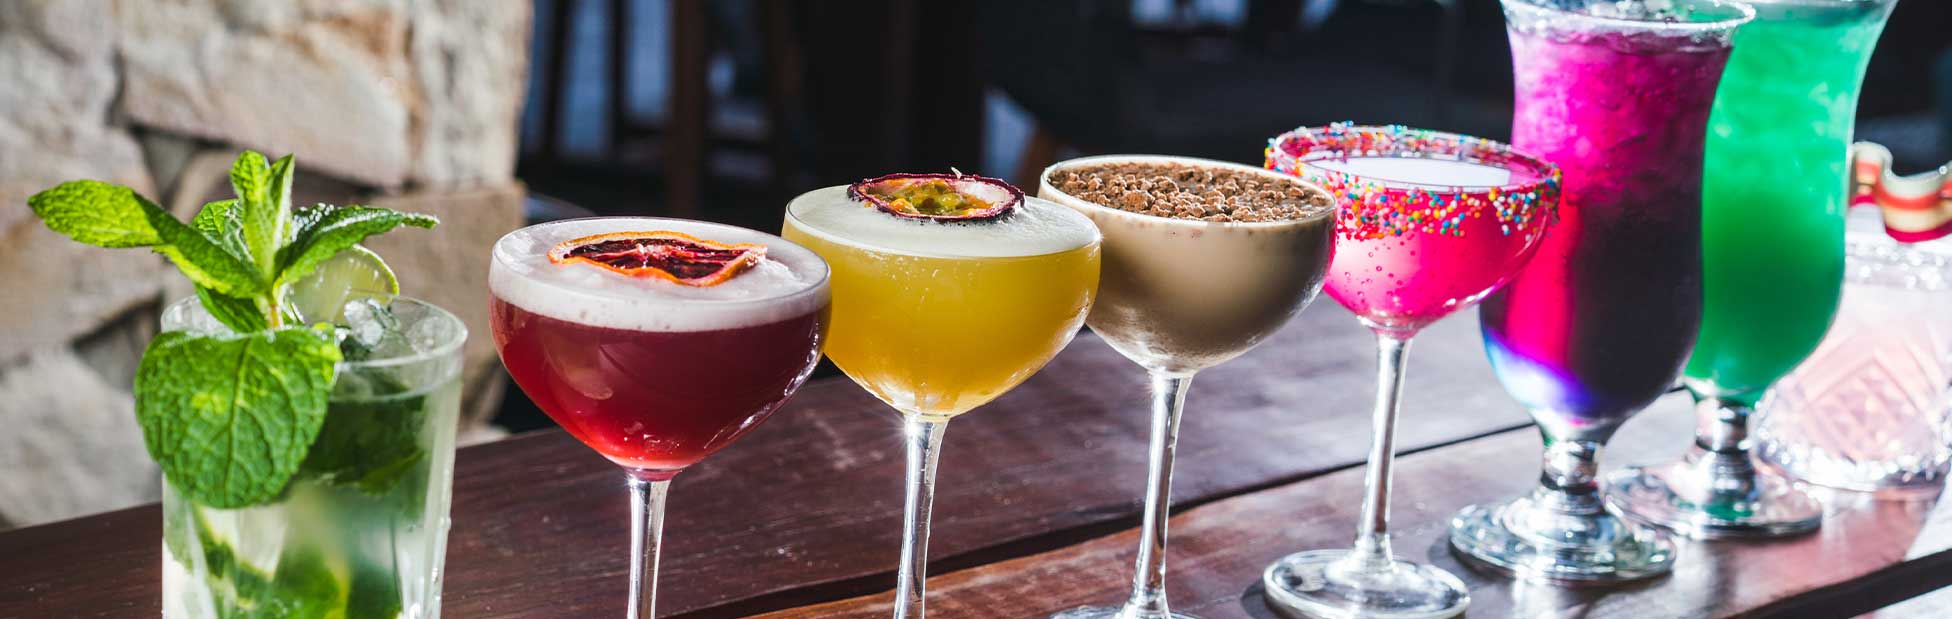 cocktails lined up on bar